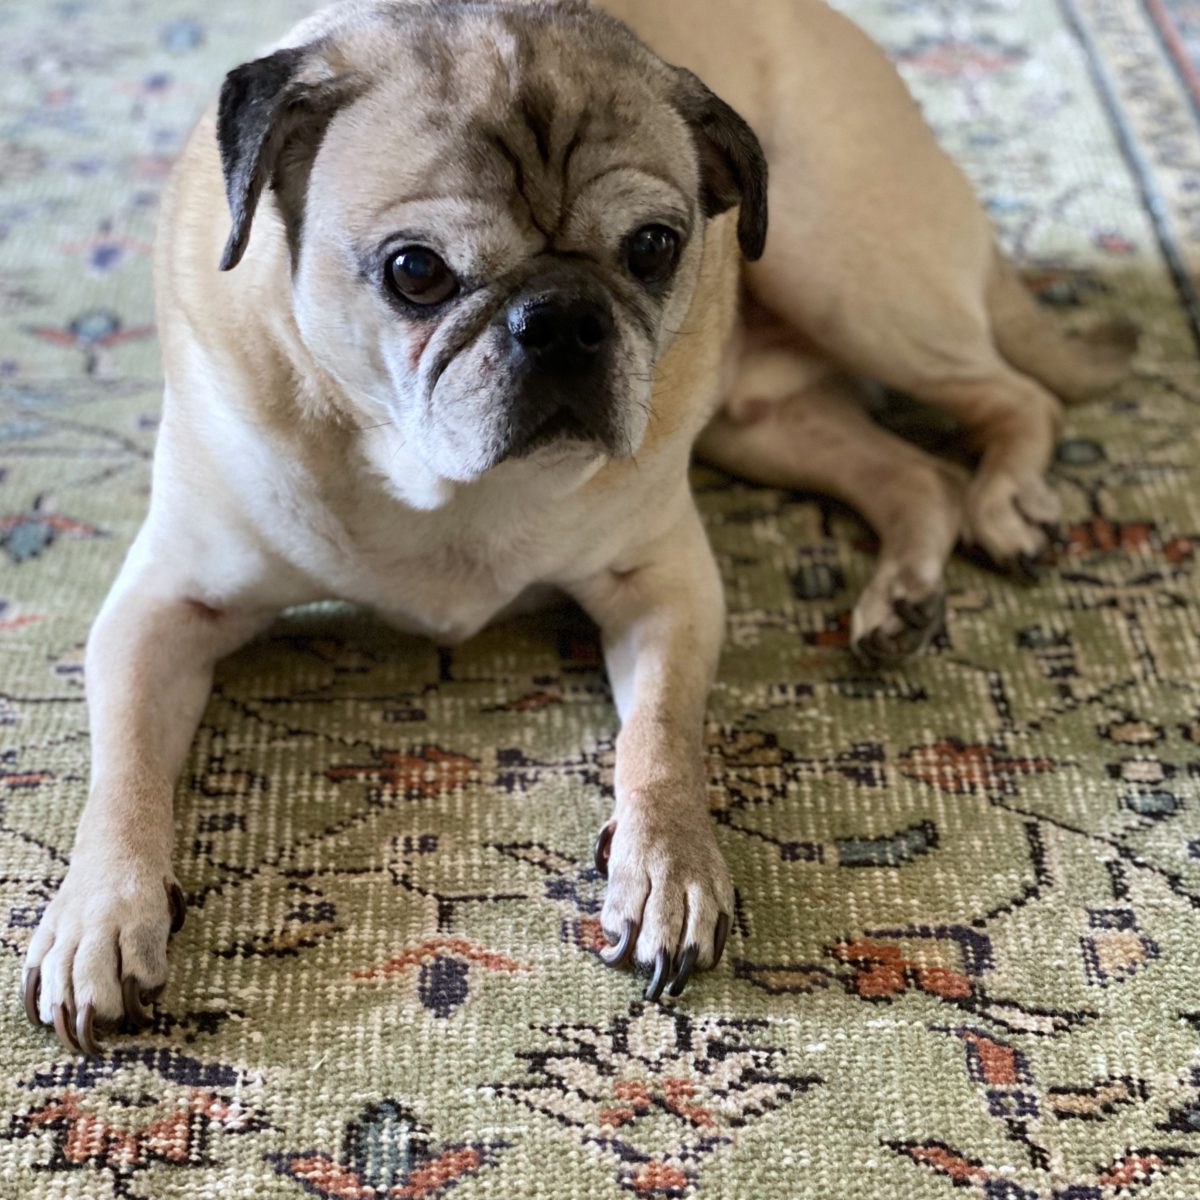 A pug laying on the rug.